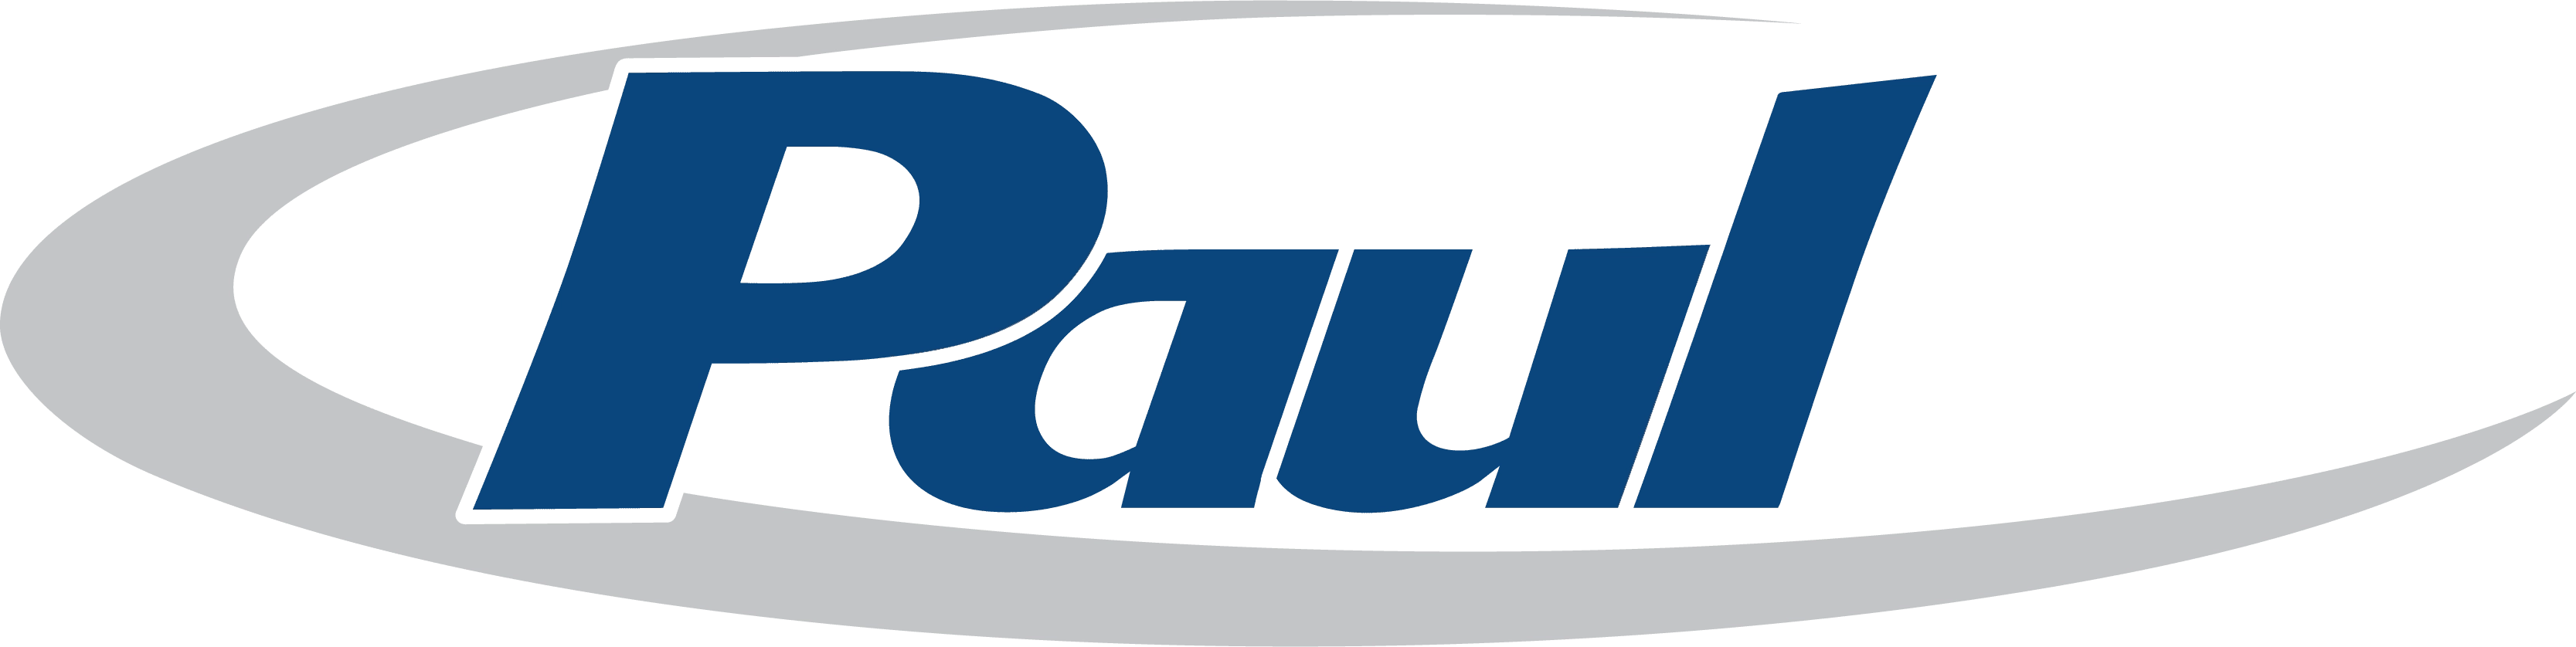 Paul Group, Germany